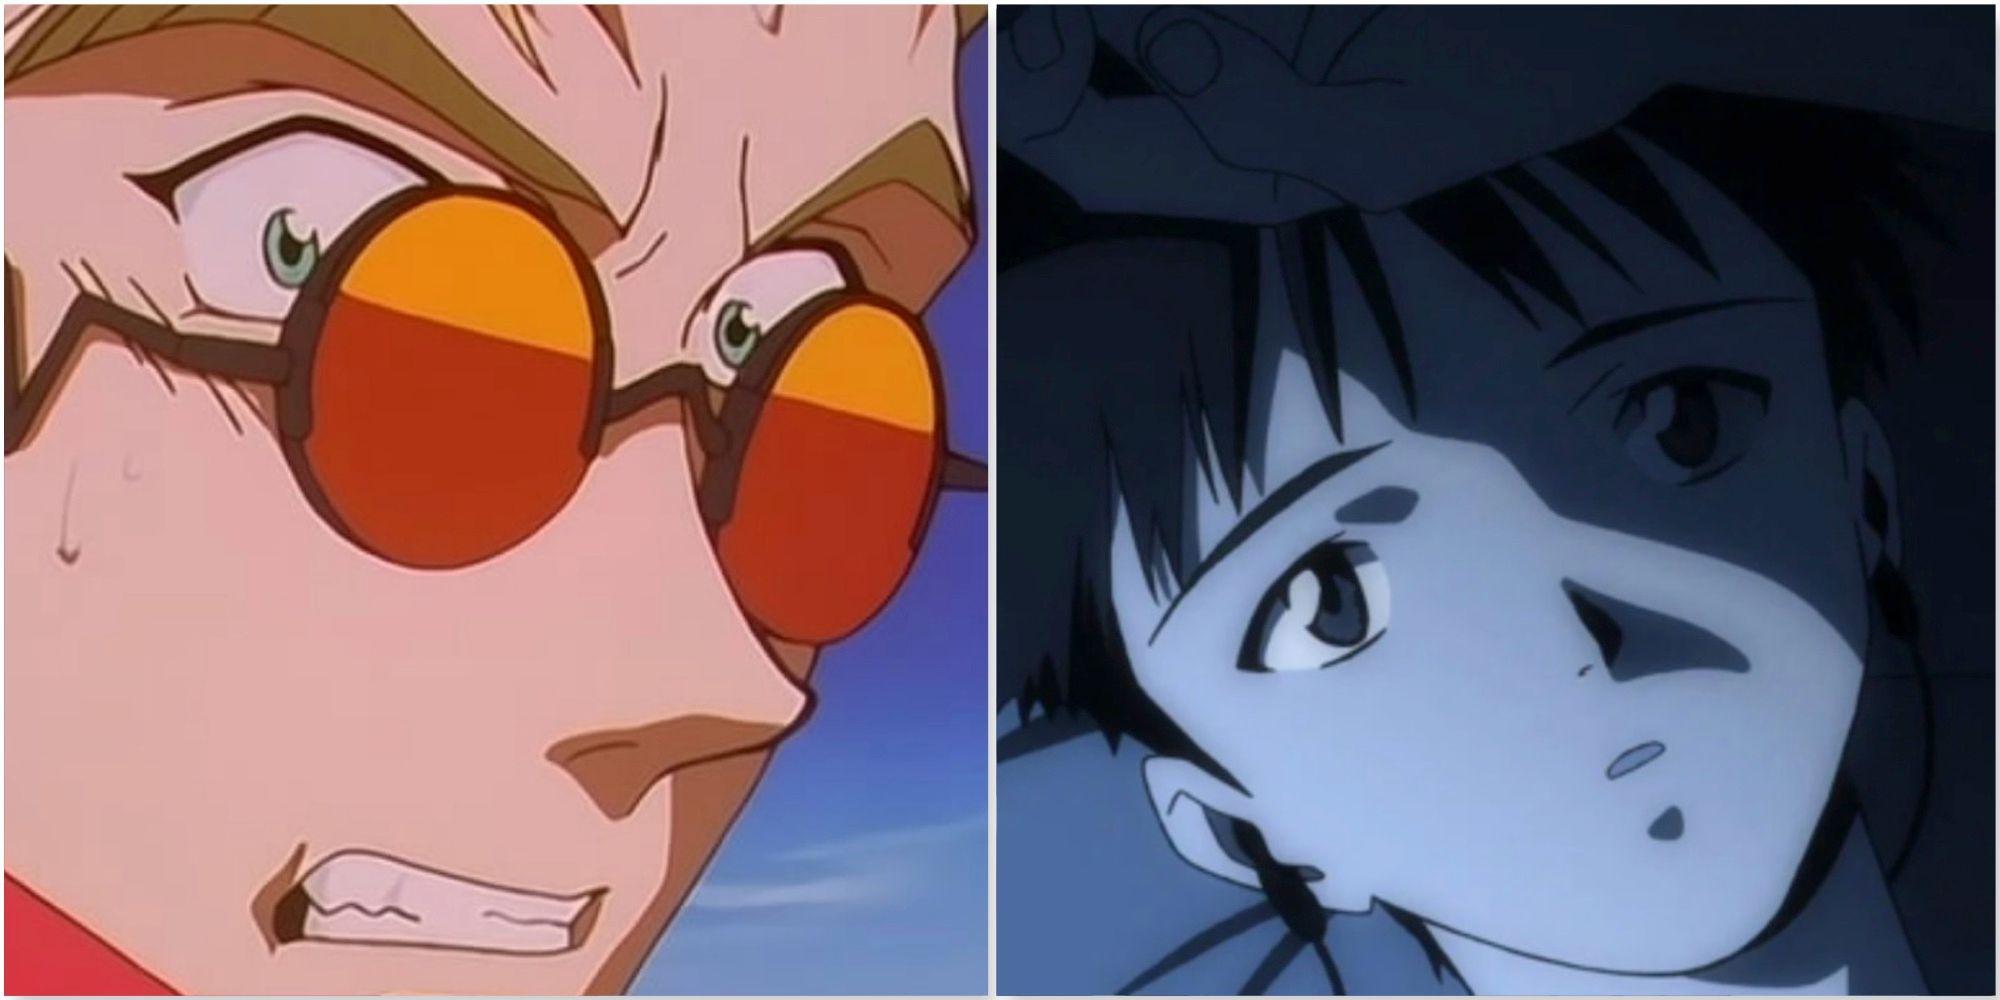 Vash in Trigun and Shinji in Neon Genesis Evangelion